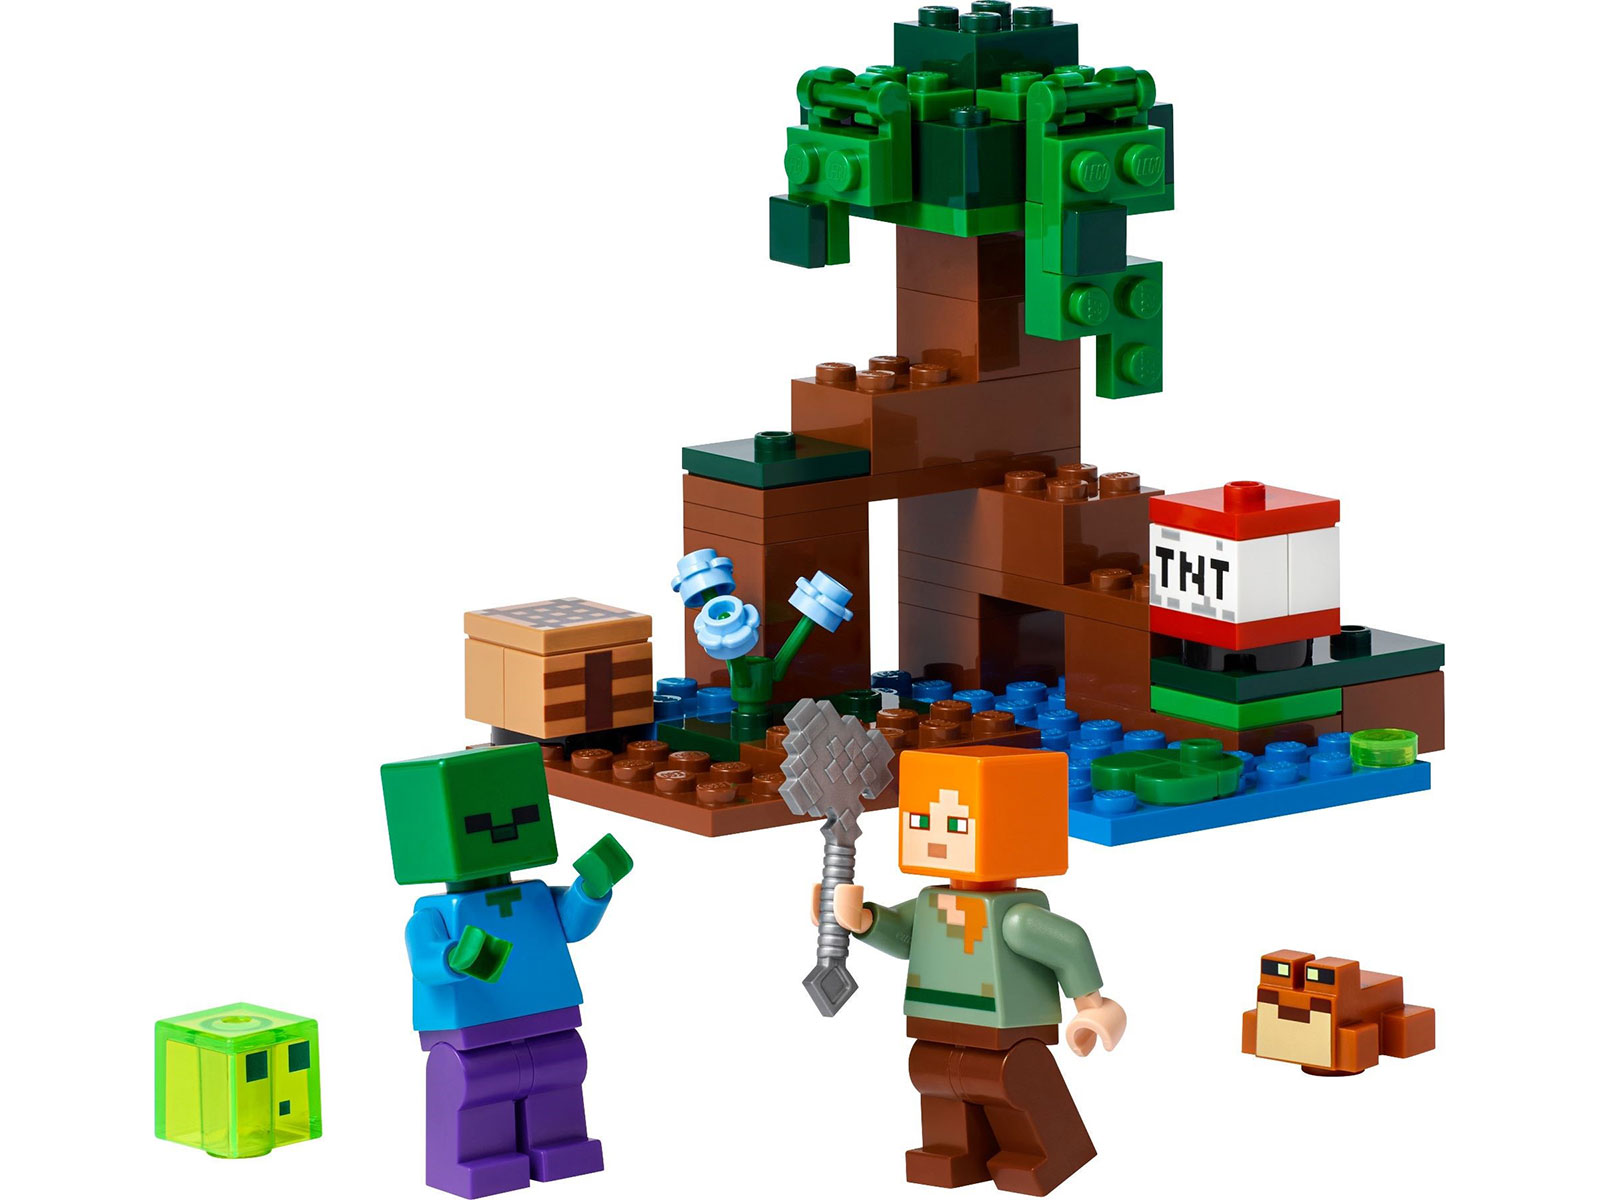 LEGO® Minecraft® 21240 - Das Sumpfabenteuer